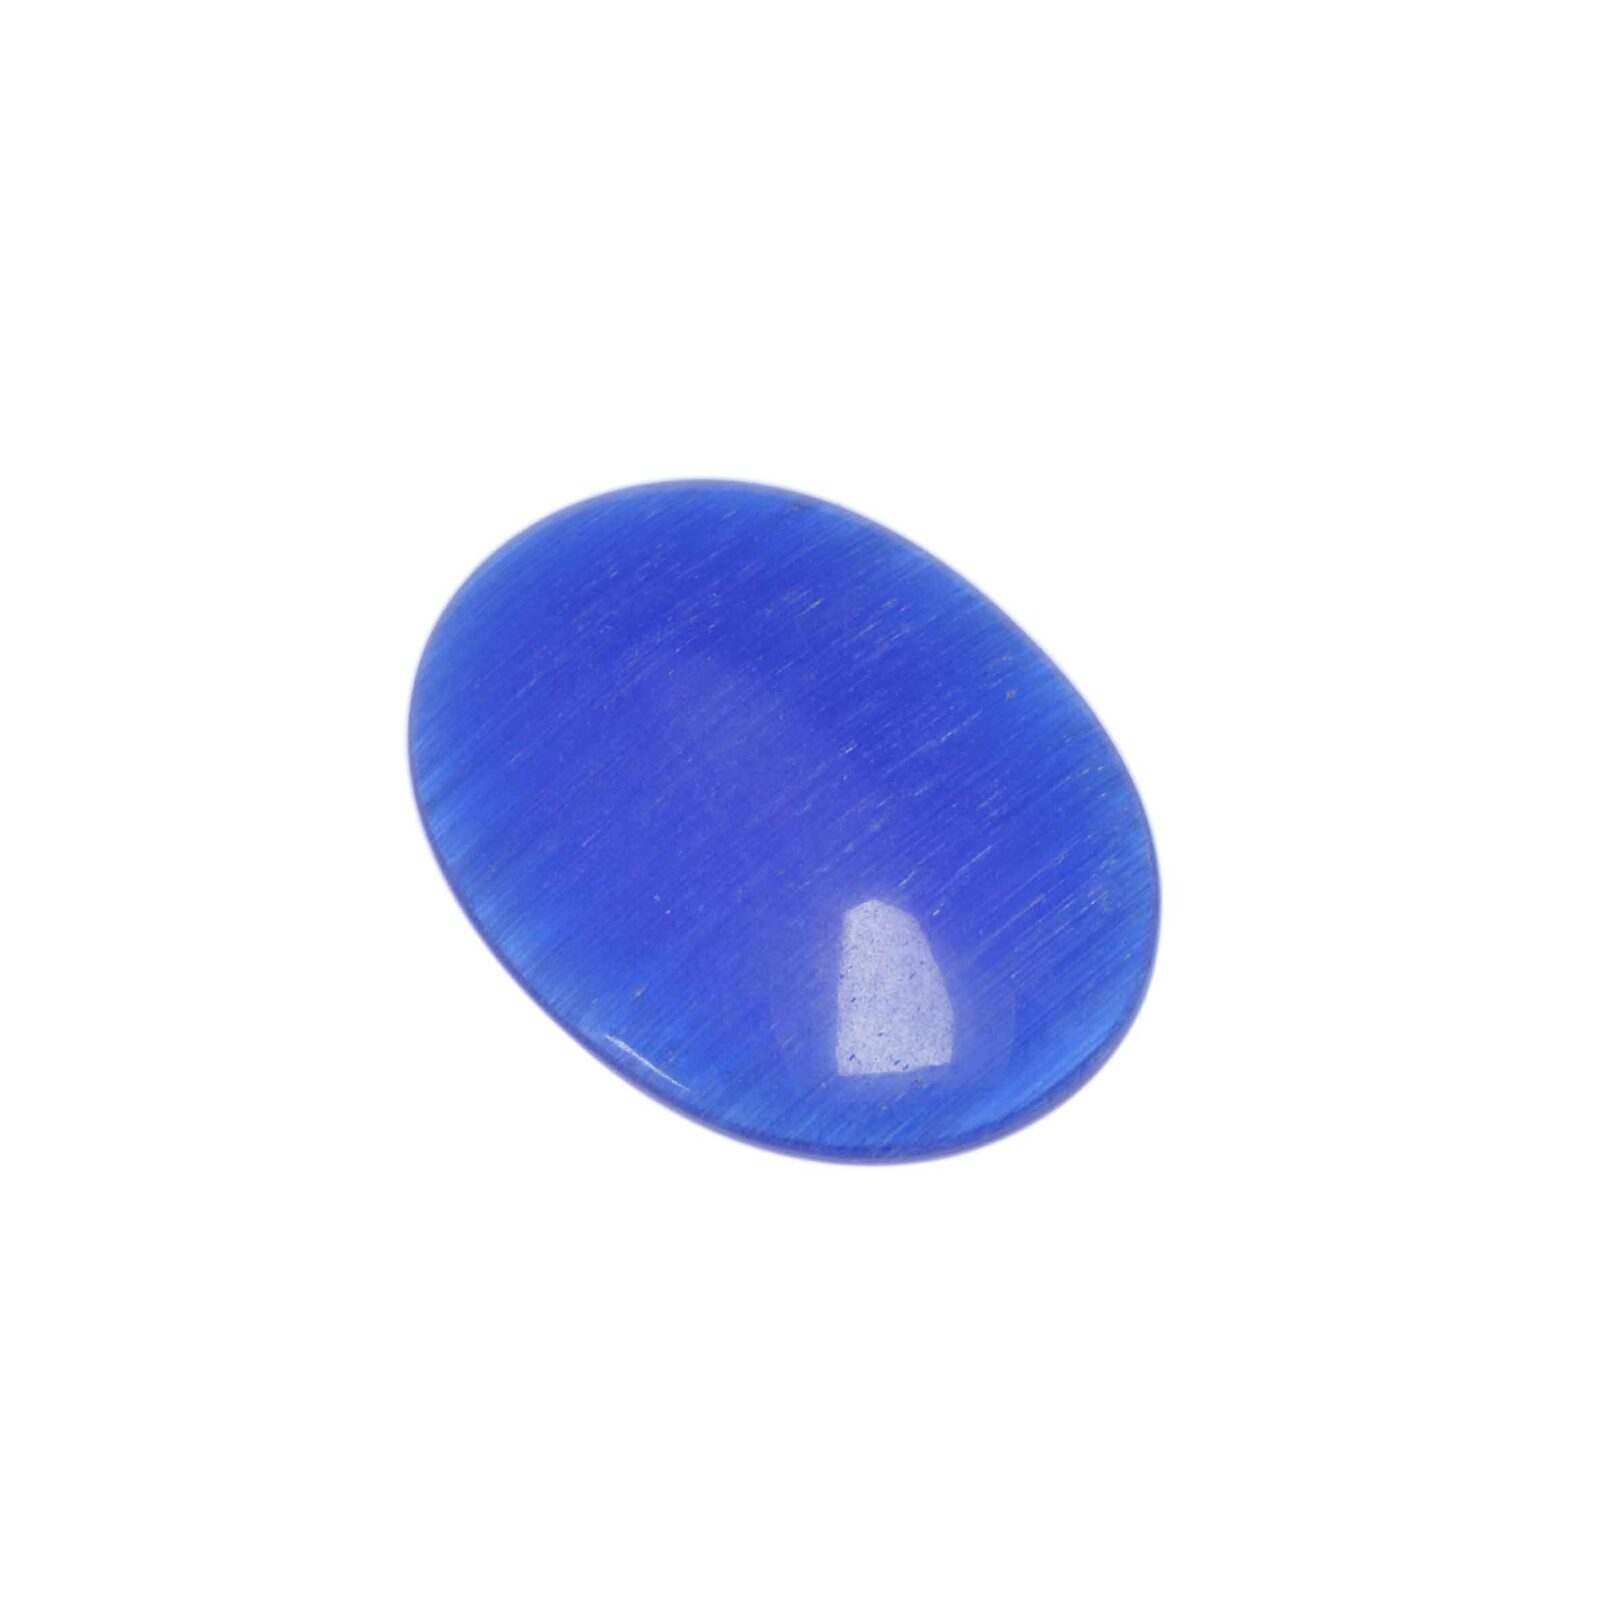 Blauwe ovale kattenoog cabochon